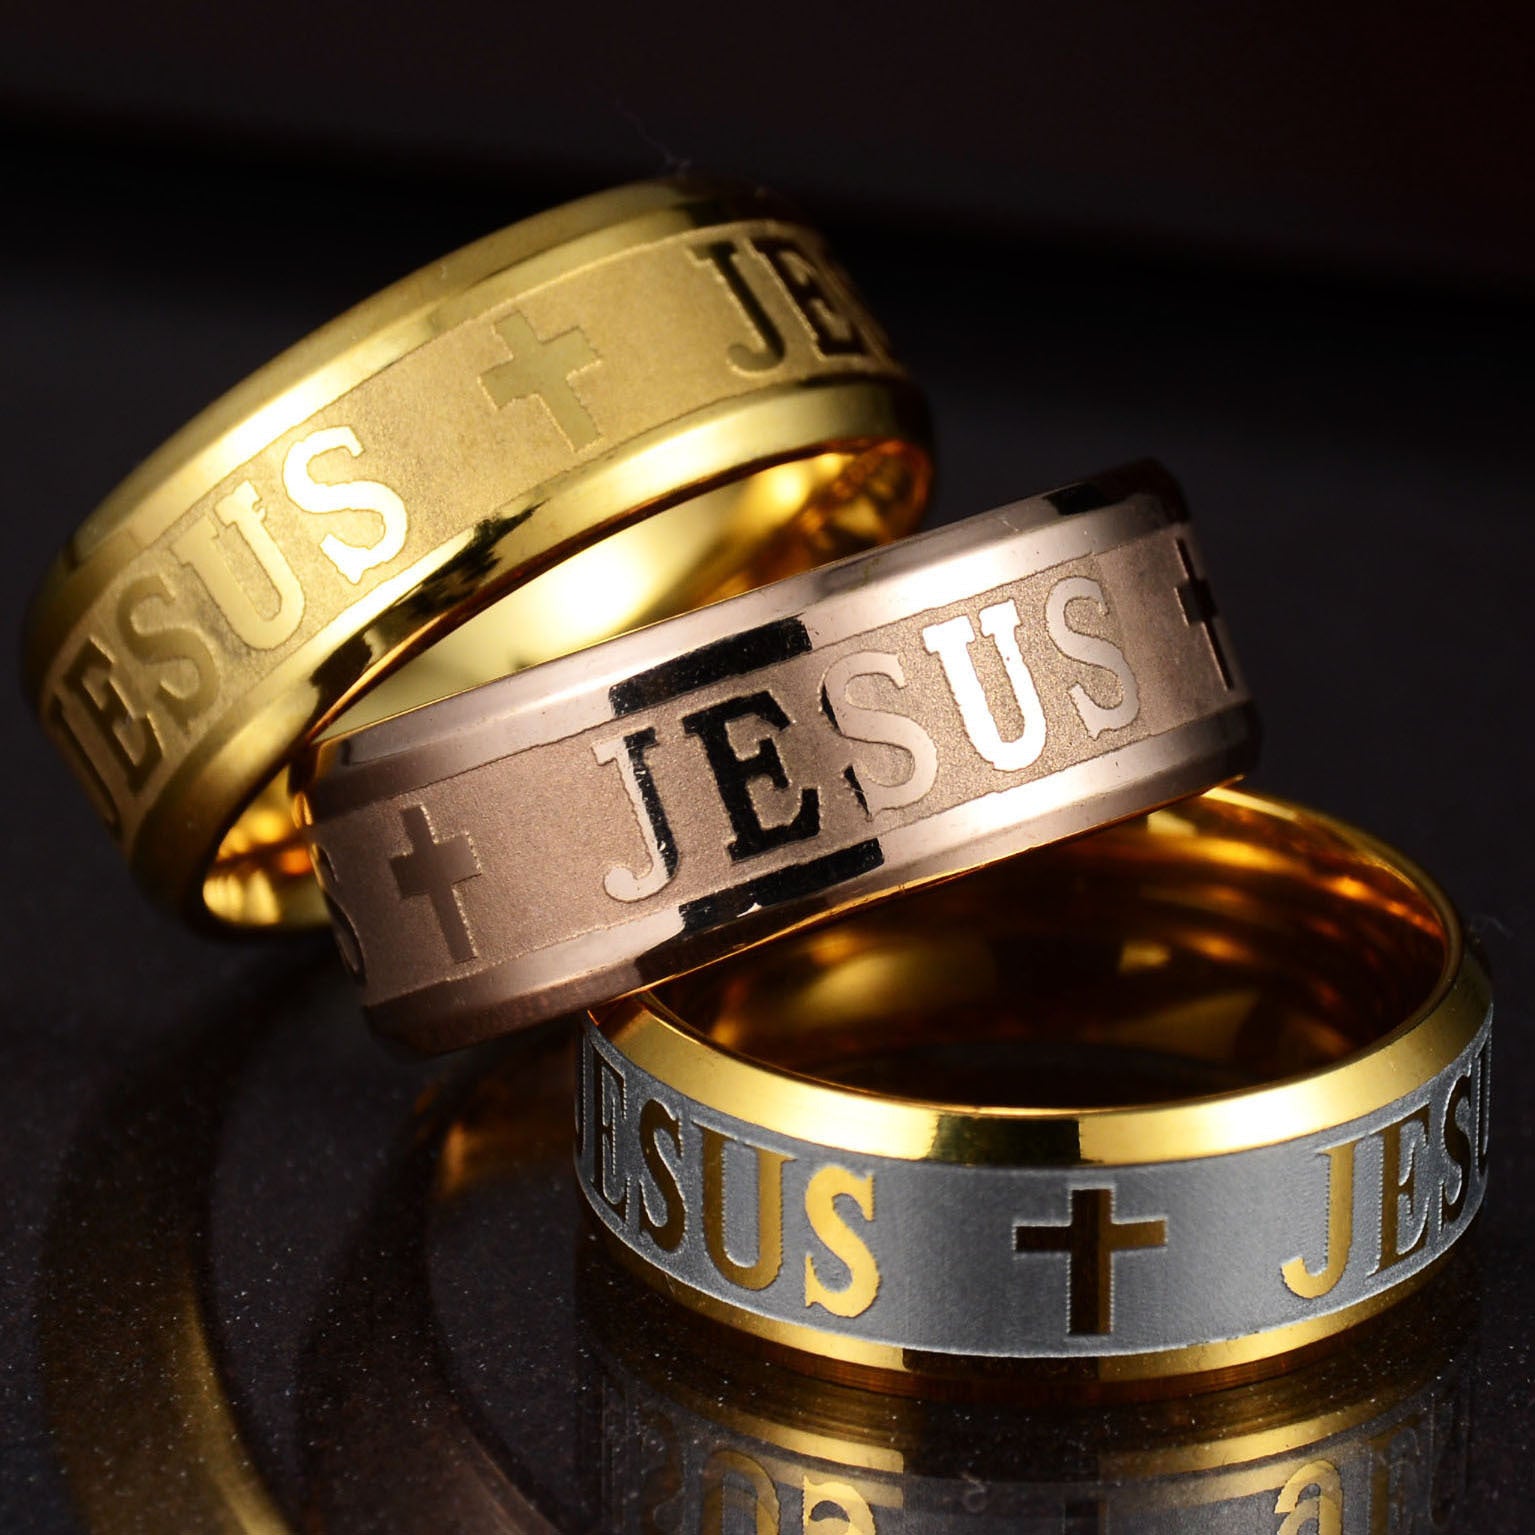 Jesus Stainless Steel Ring